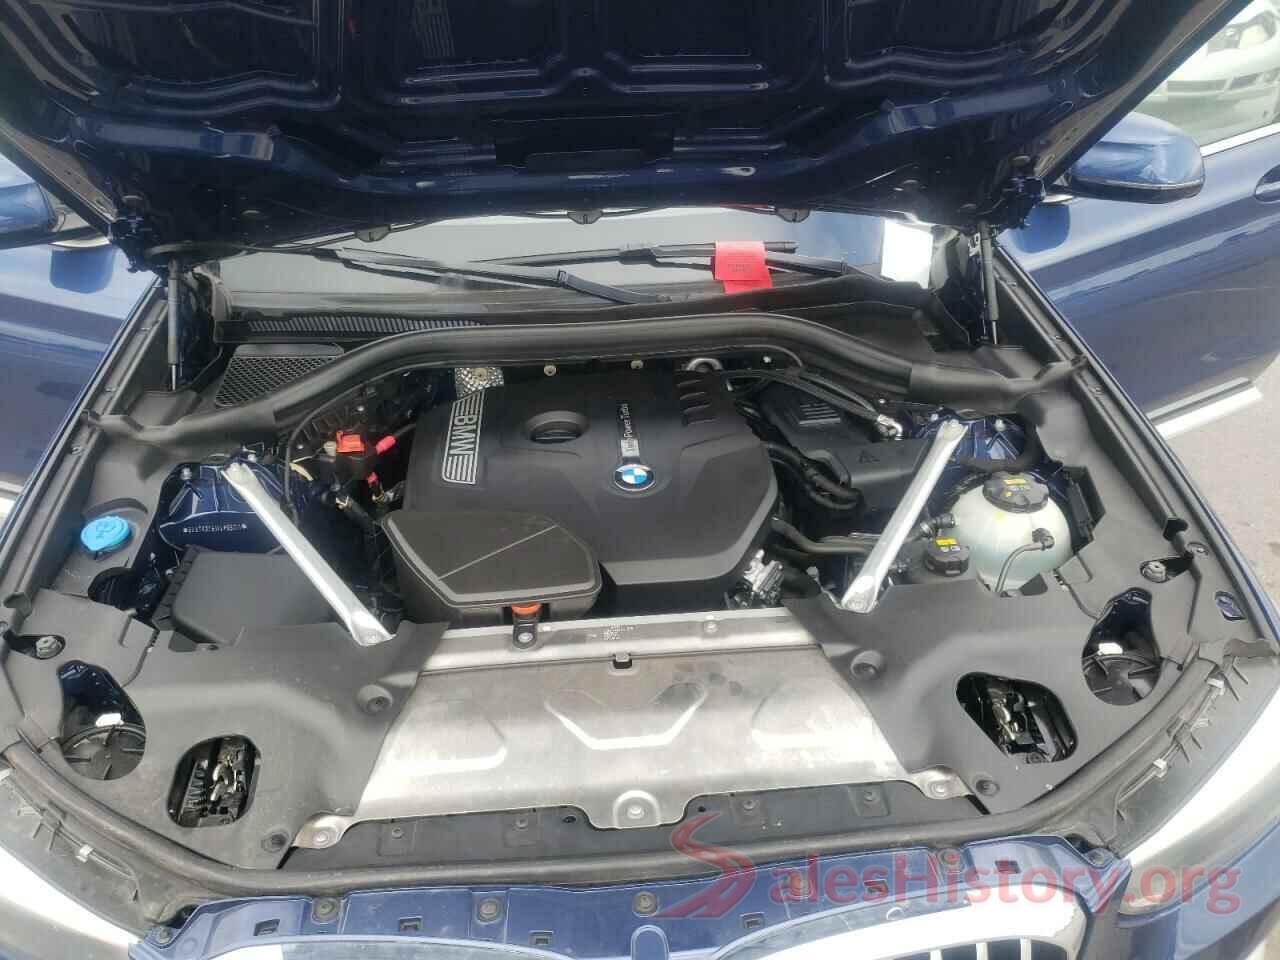 5UXTR9C51KLP95011 2019 BMW X3